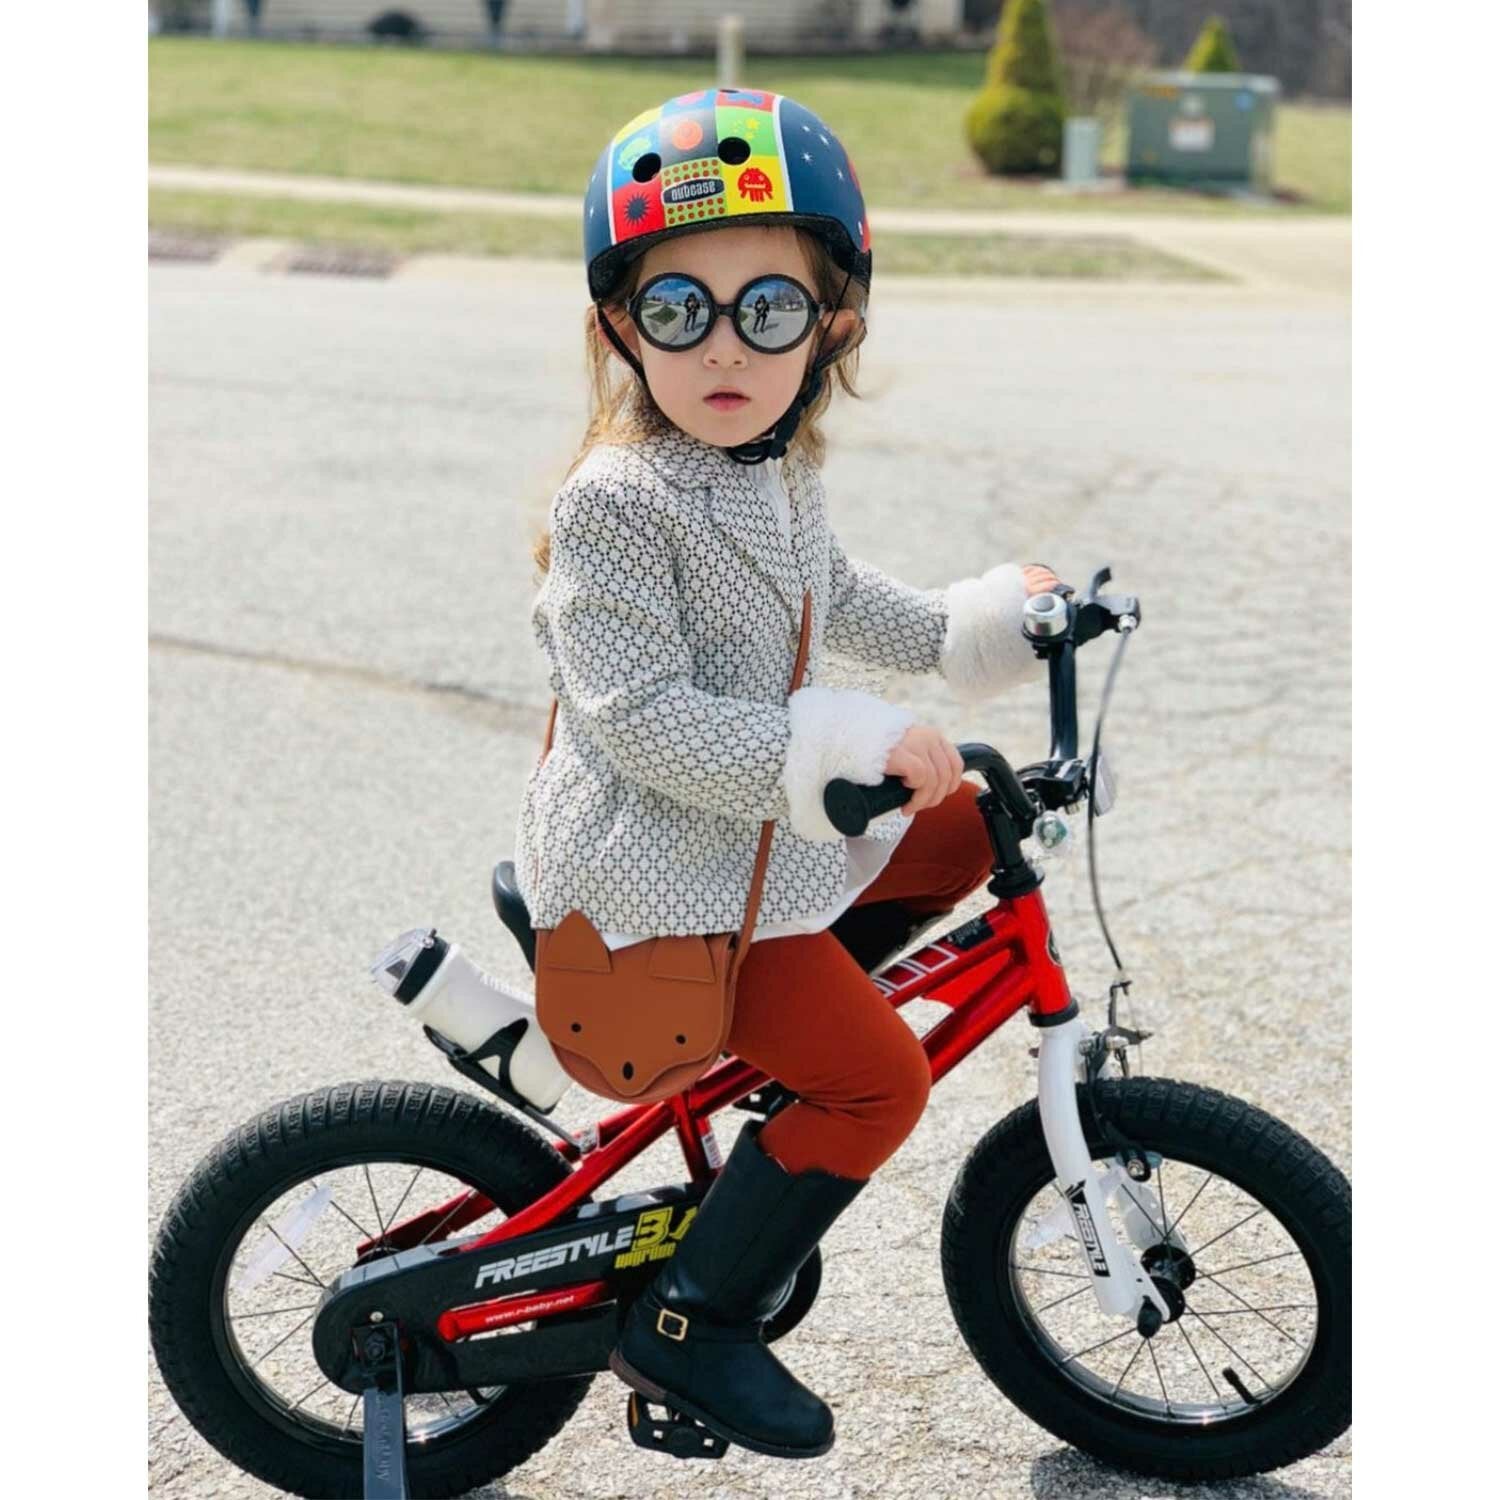 [EU Direct] RoyalBaby Freestyle Kids Bike 14 Inch Children's Bicycle BMX Stabilisers Balance Bike Boys Girls Gifts